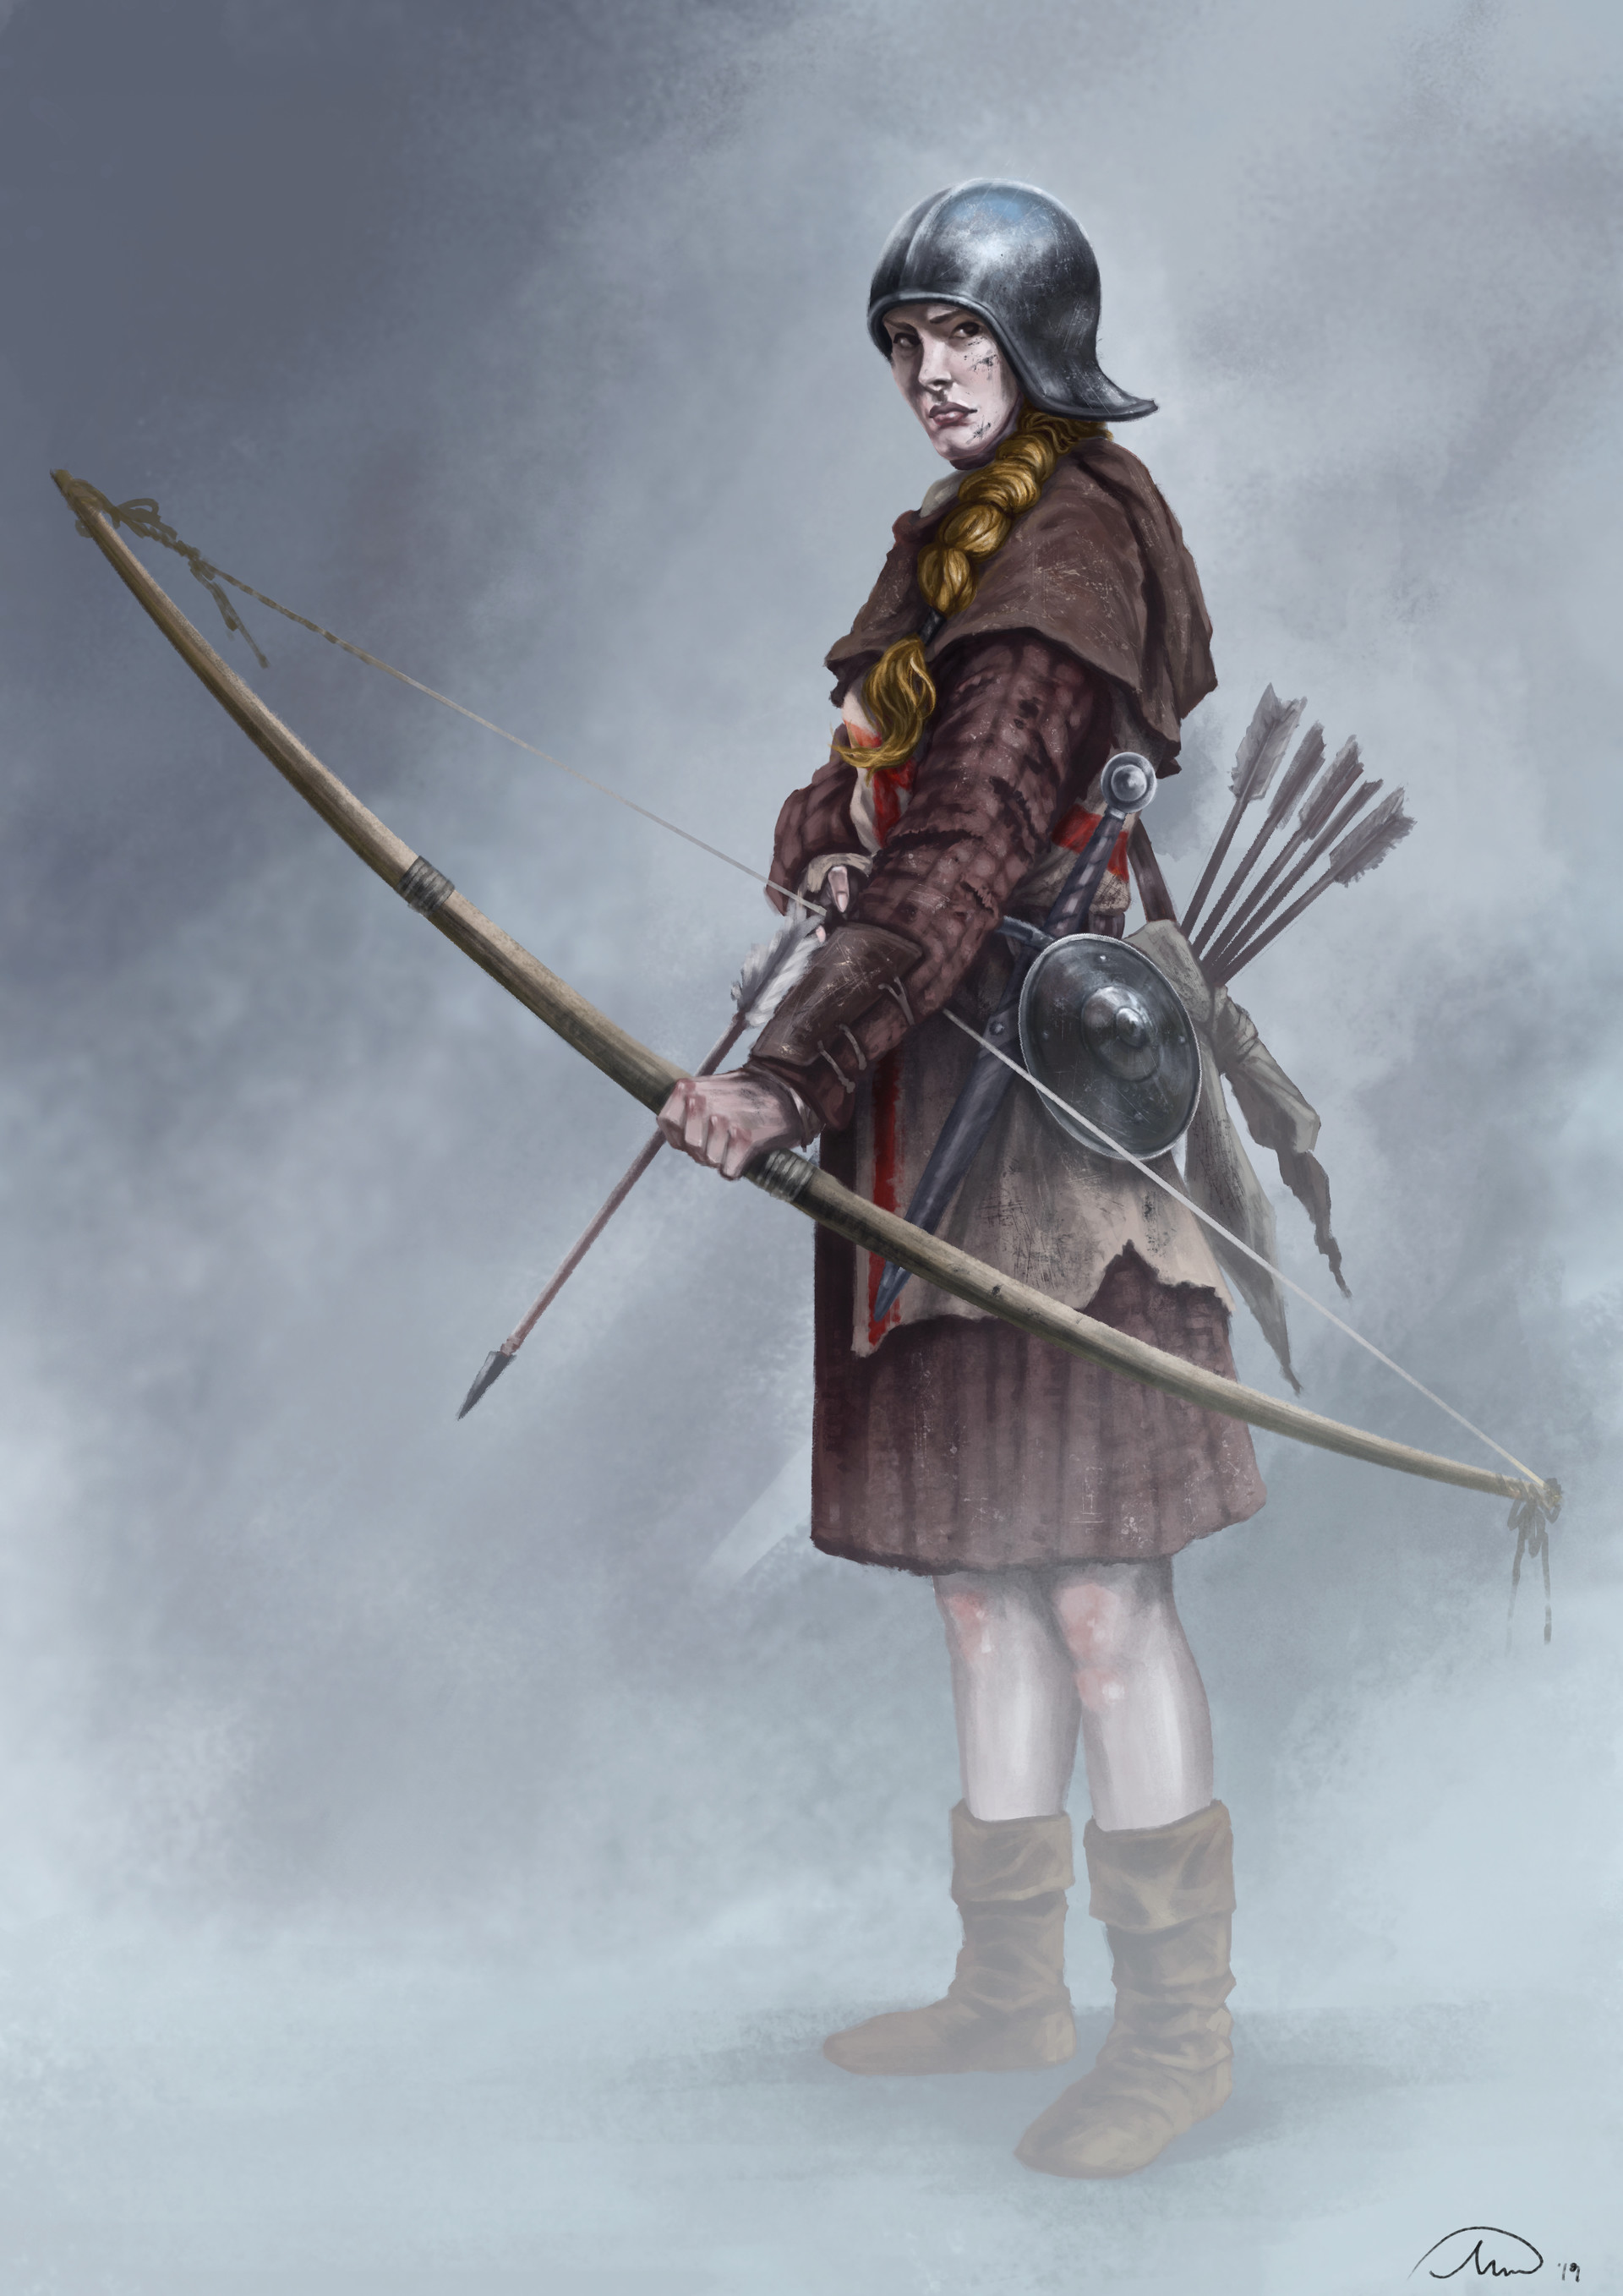 the English Logbow-woman by Marco Dotti : r/armoredwomen